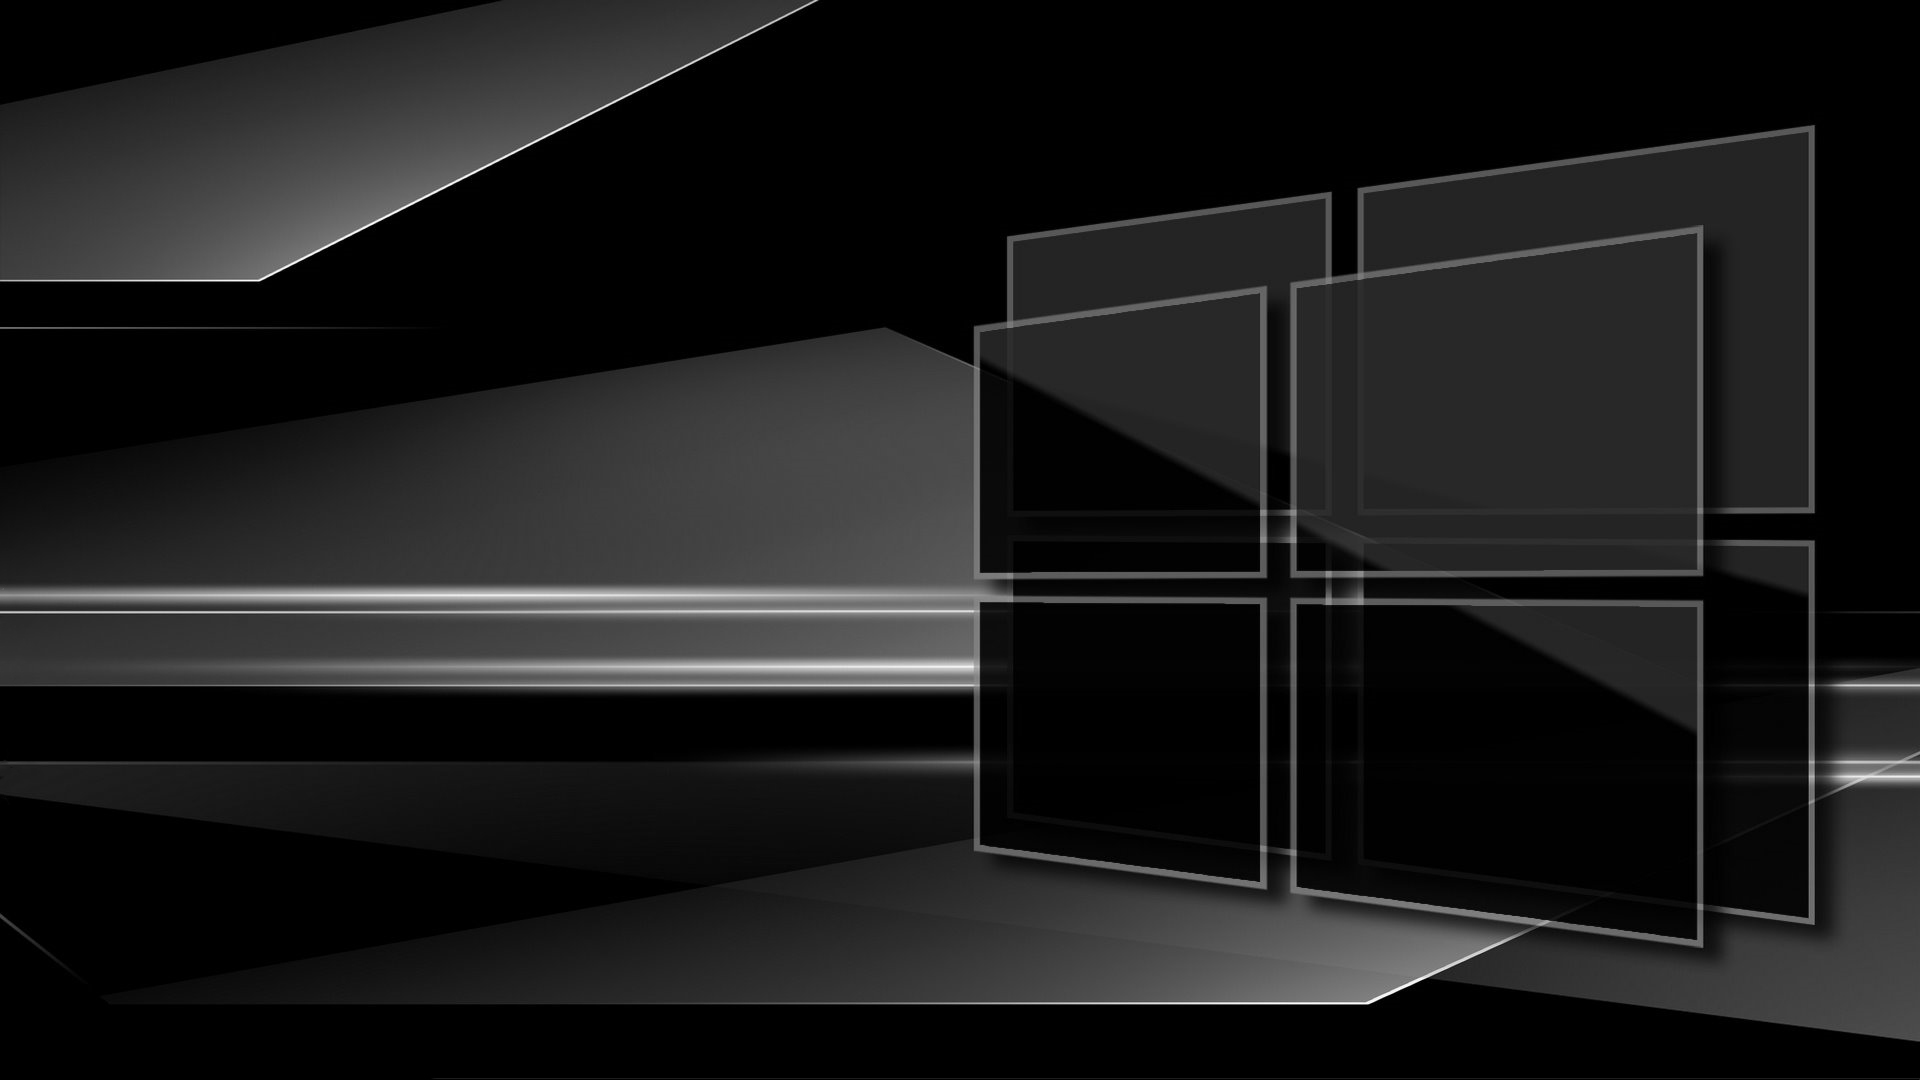 Fenetre Windows 10 Digital Art Monochrome 1920x1080